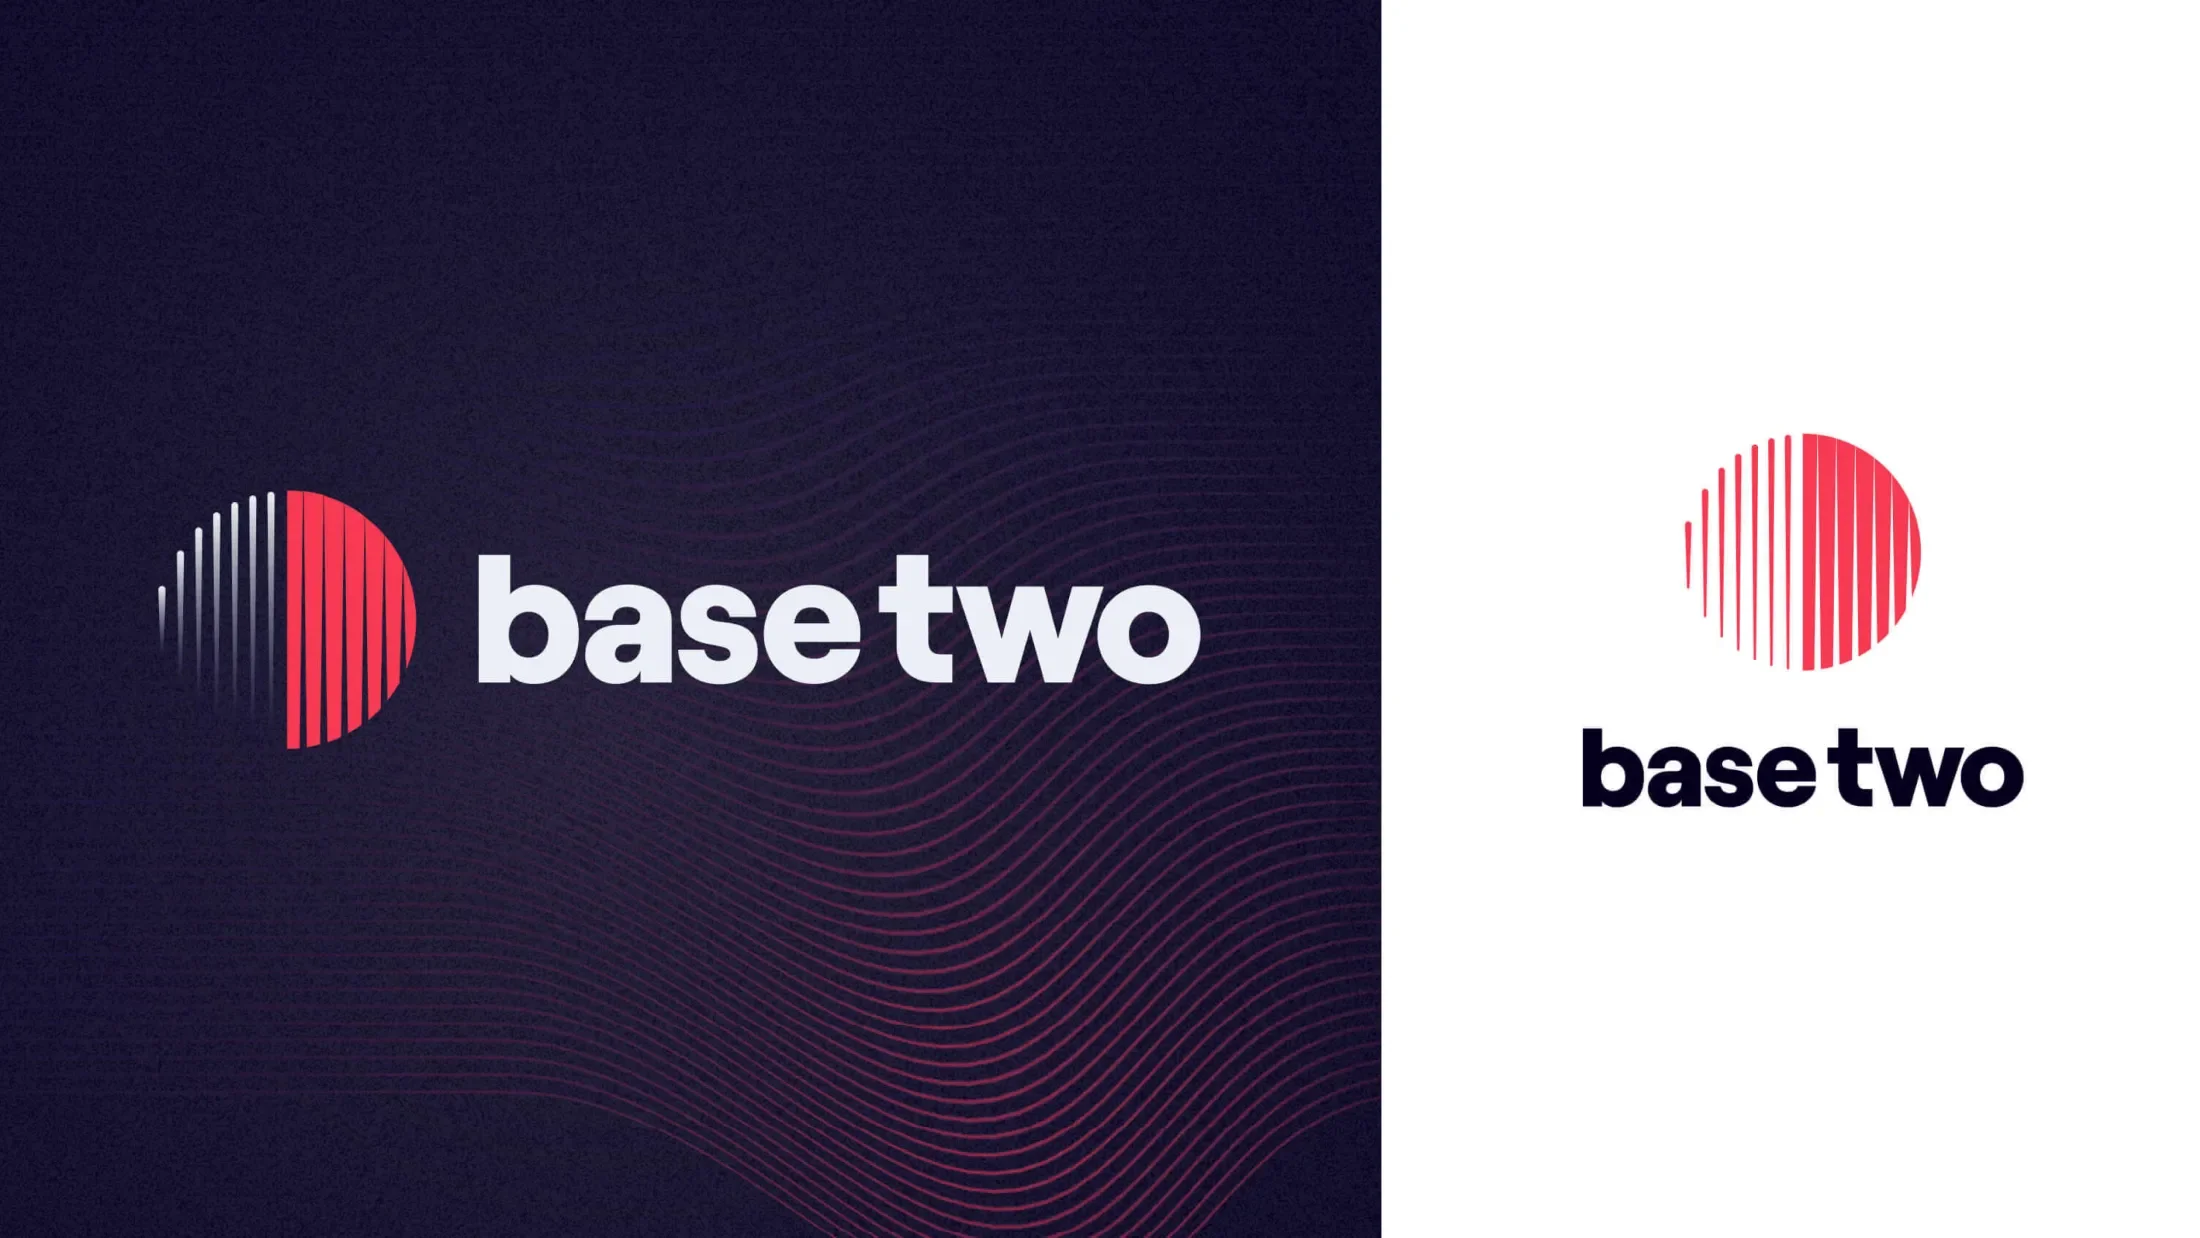 basetwo logo on dark and light